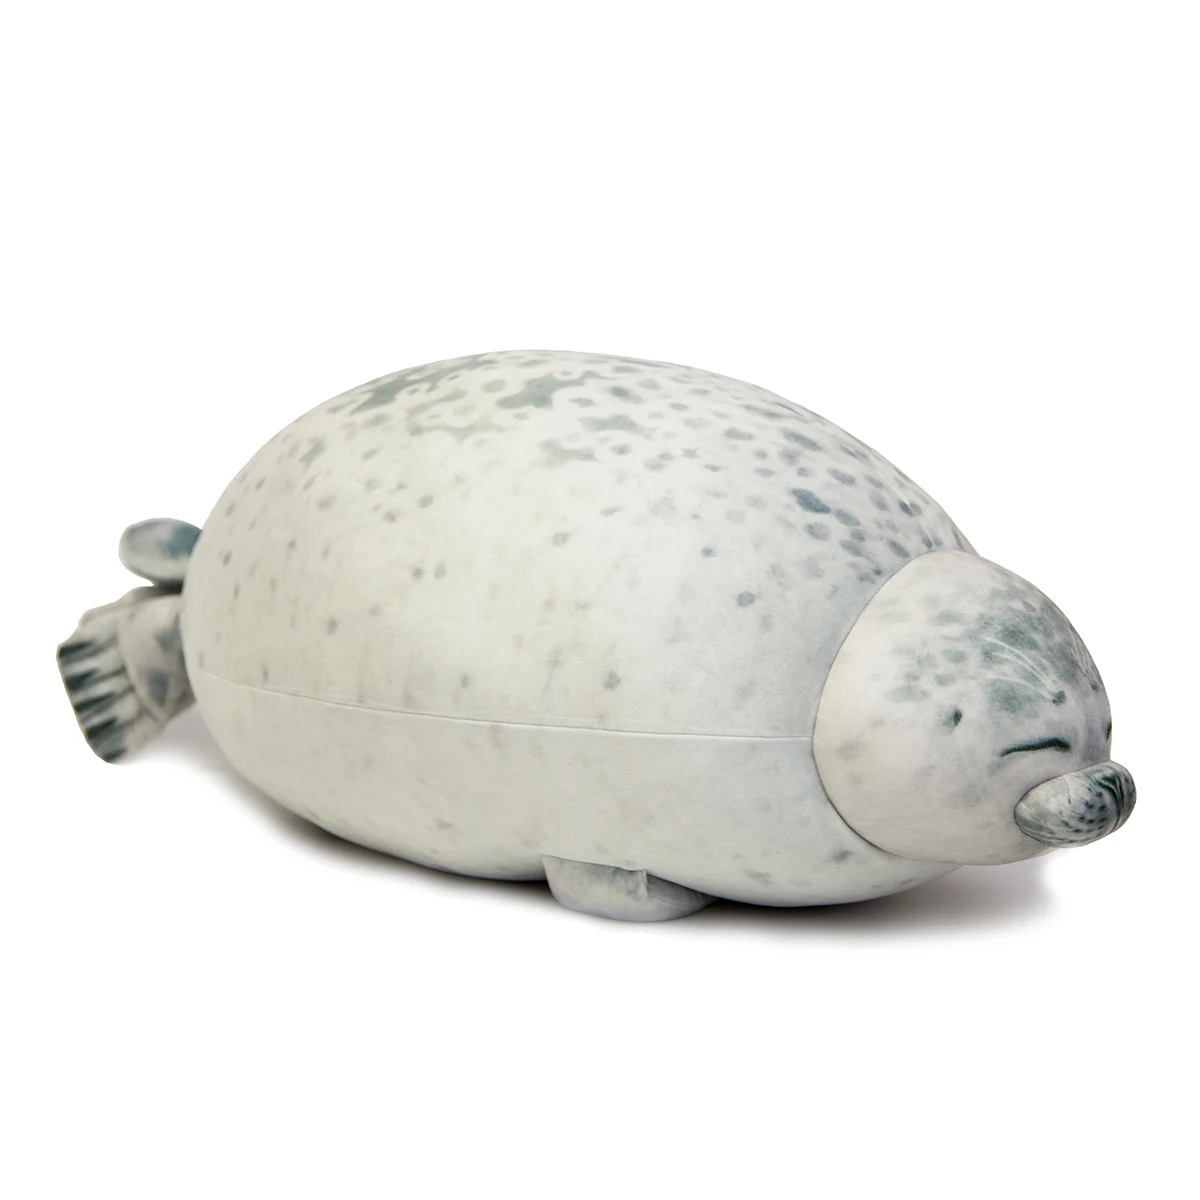 80 20cm Hot Toy Gaint 3D Novelty Throw Pillows Soft Seal Plush Stuffed Plush Housewarming Party